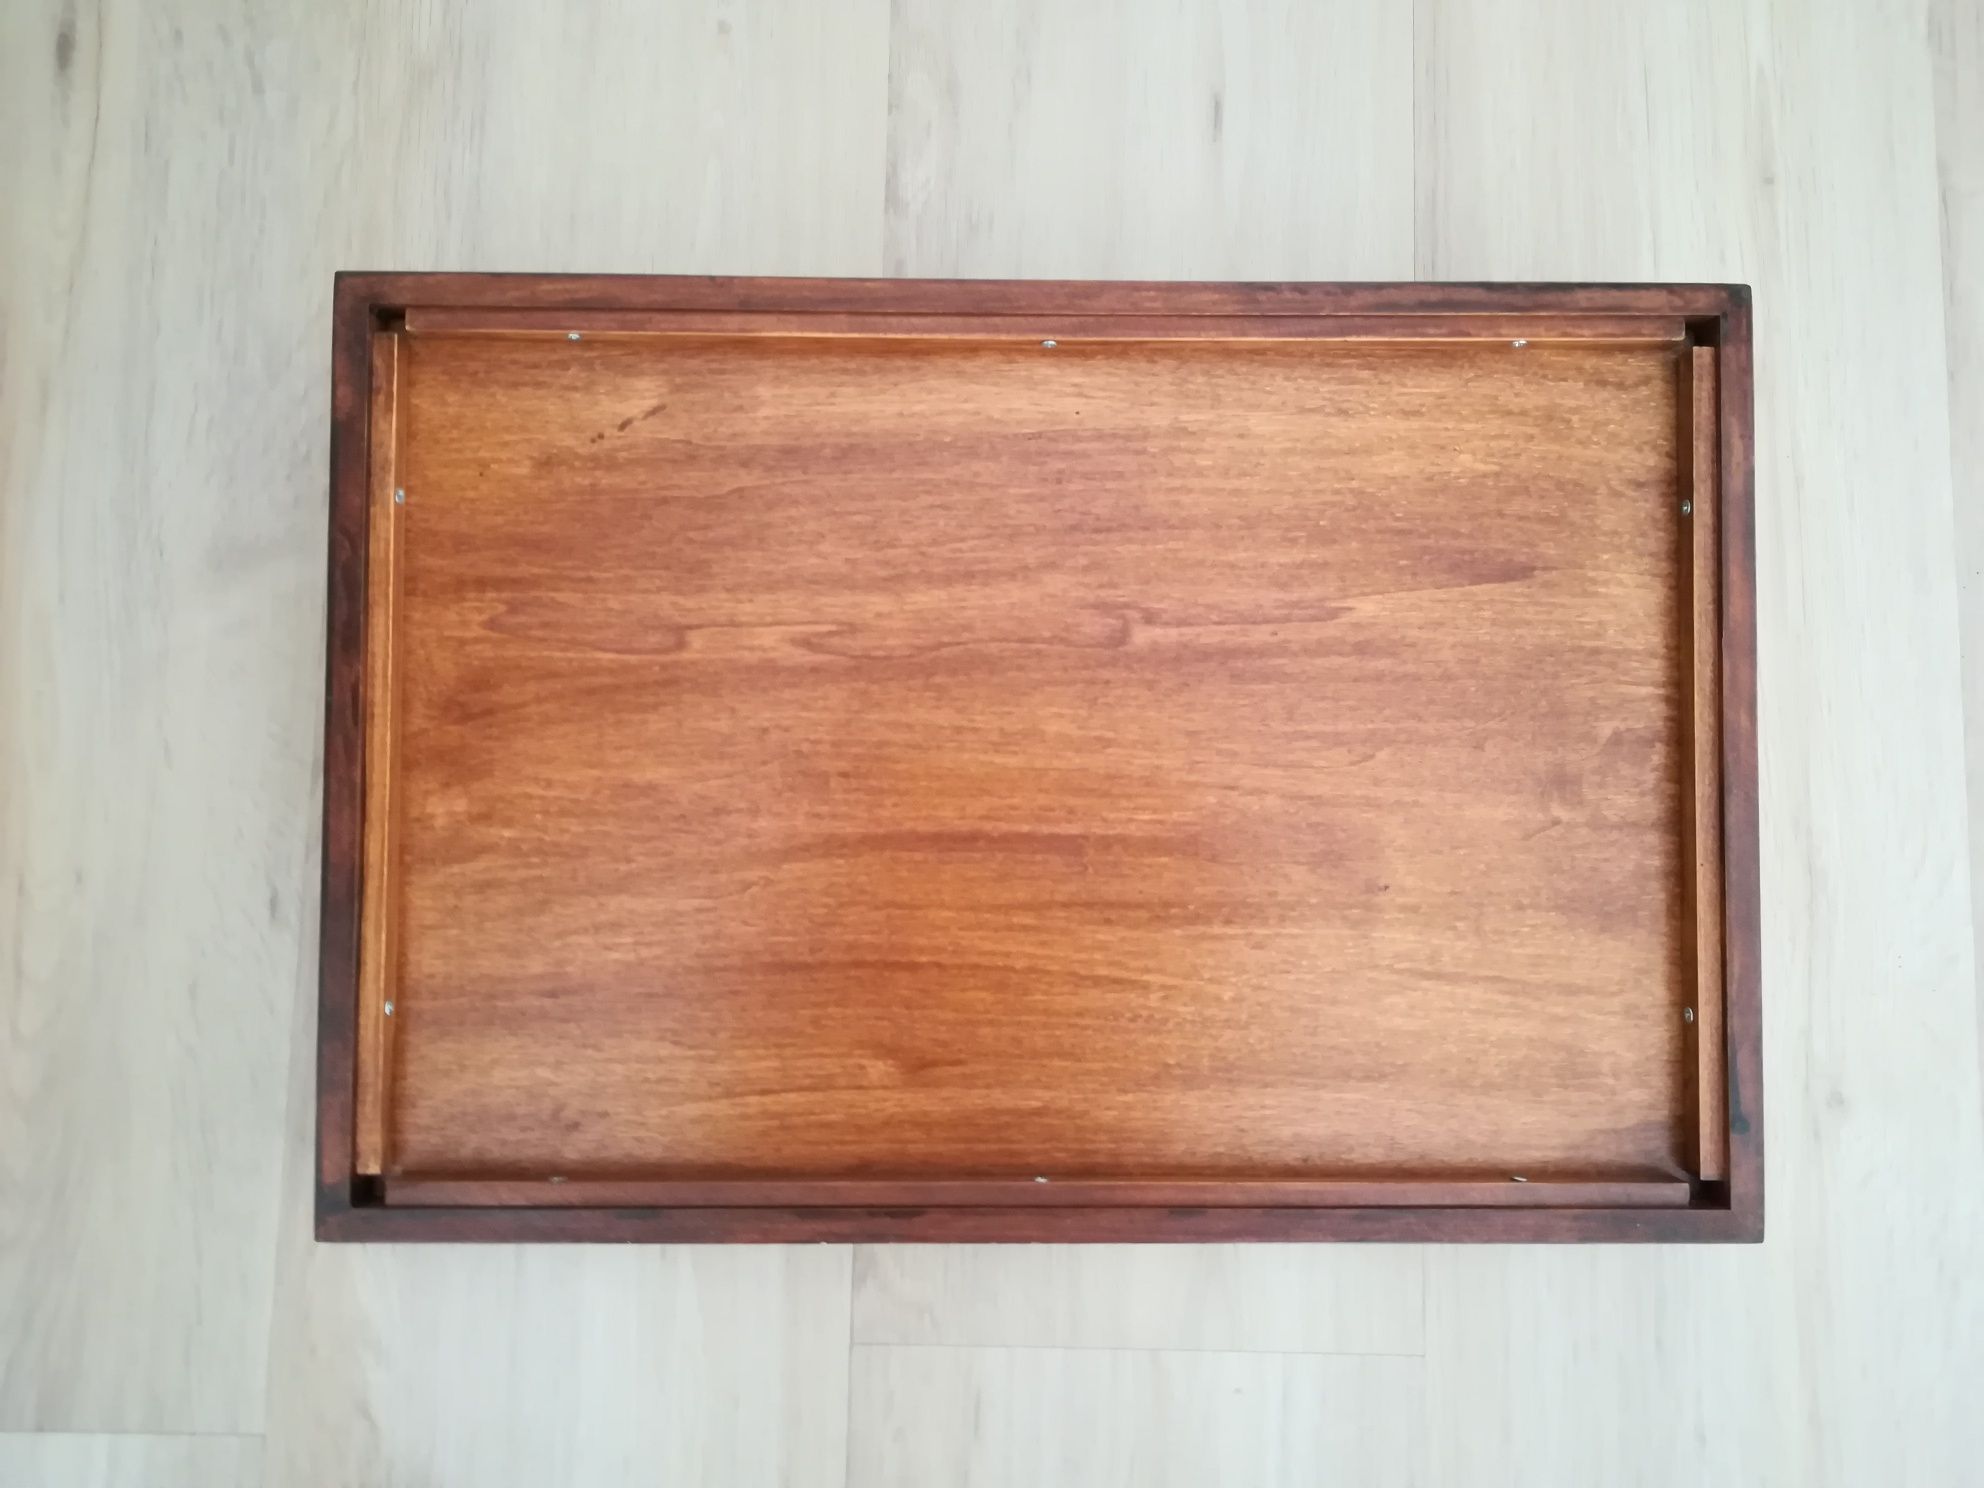 Tabuleiro rectangular em madeira